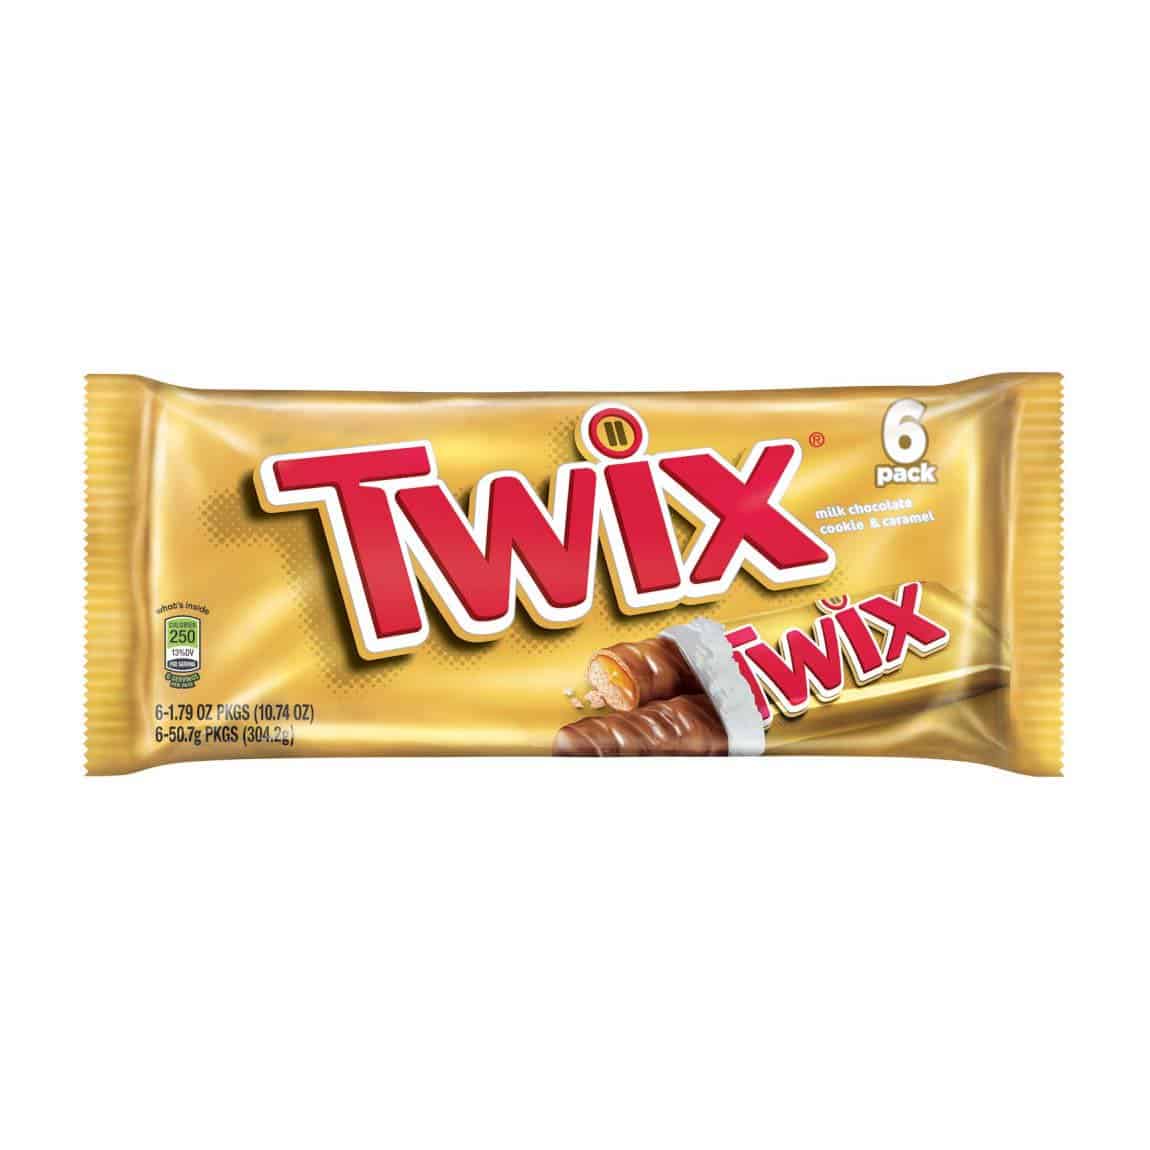 Does Twix Have Peanuts?